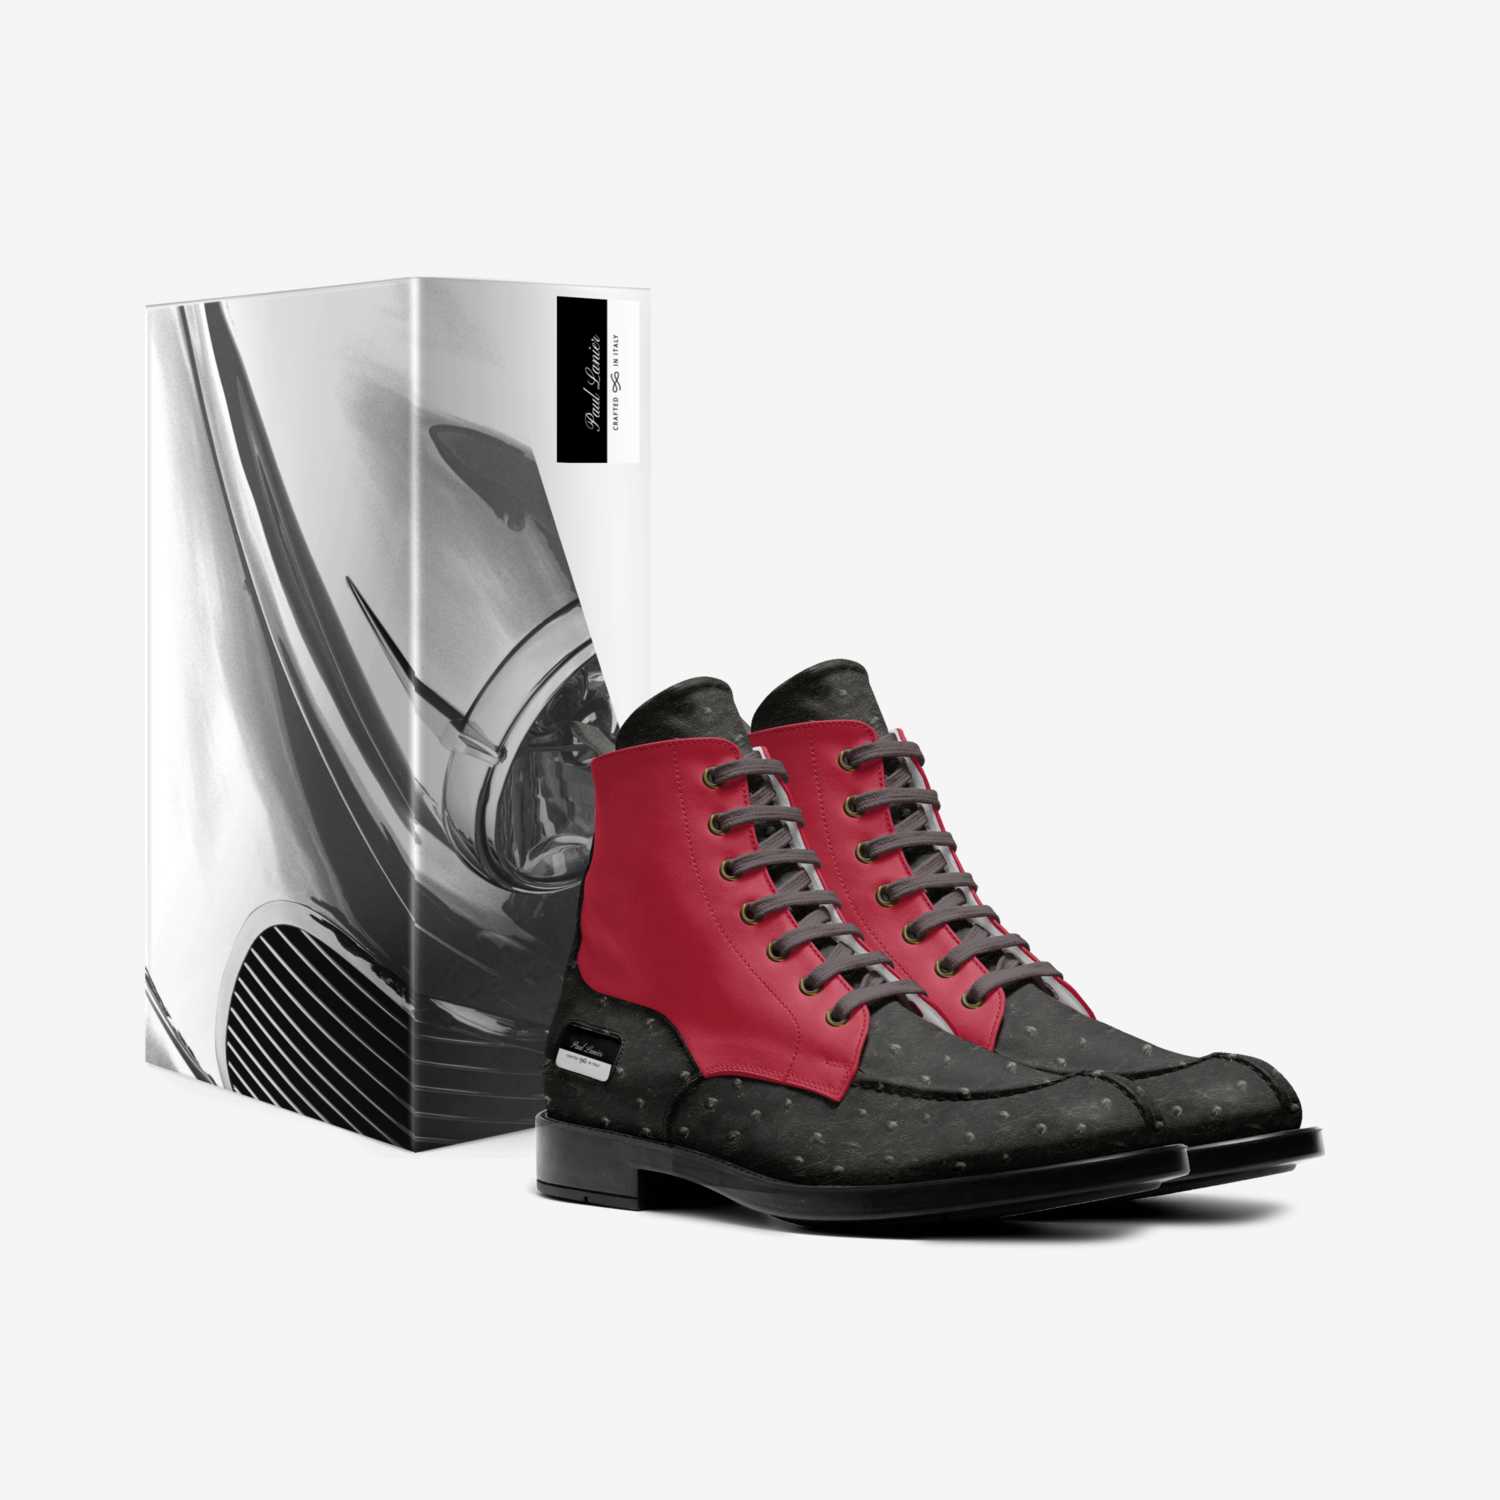 Paul Lanier custom made in Italy shoes by Paul Lanier Jones | Box view